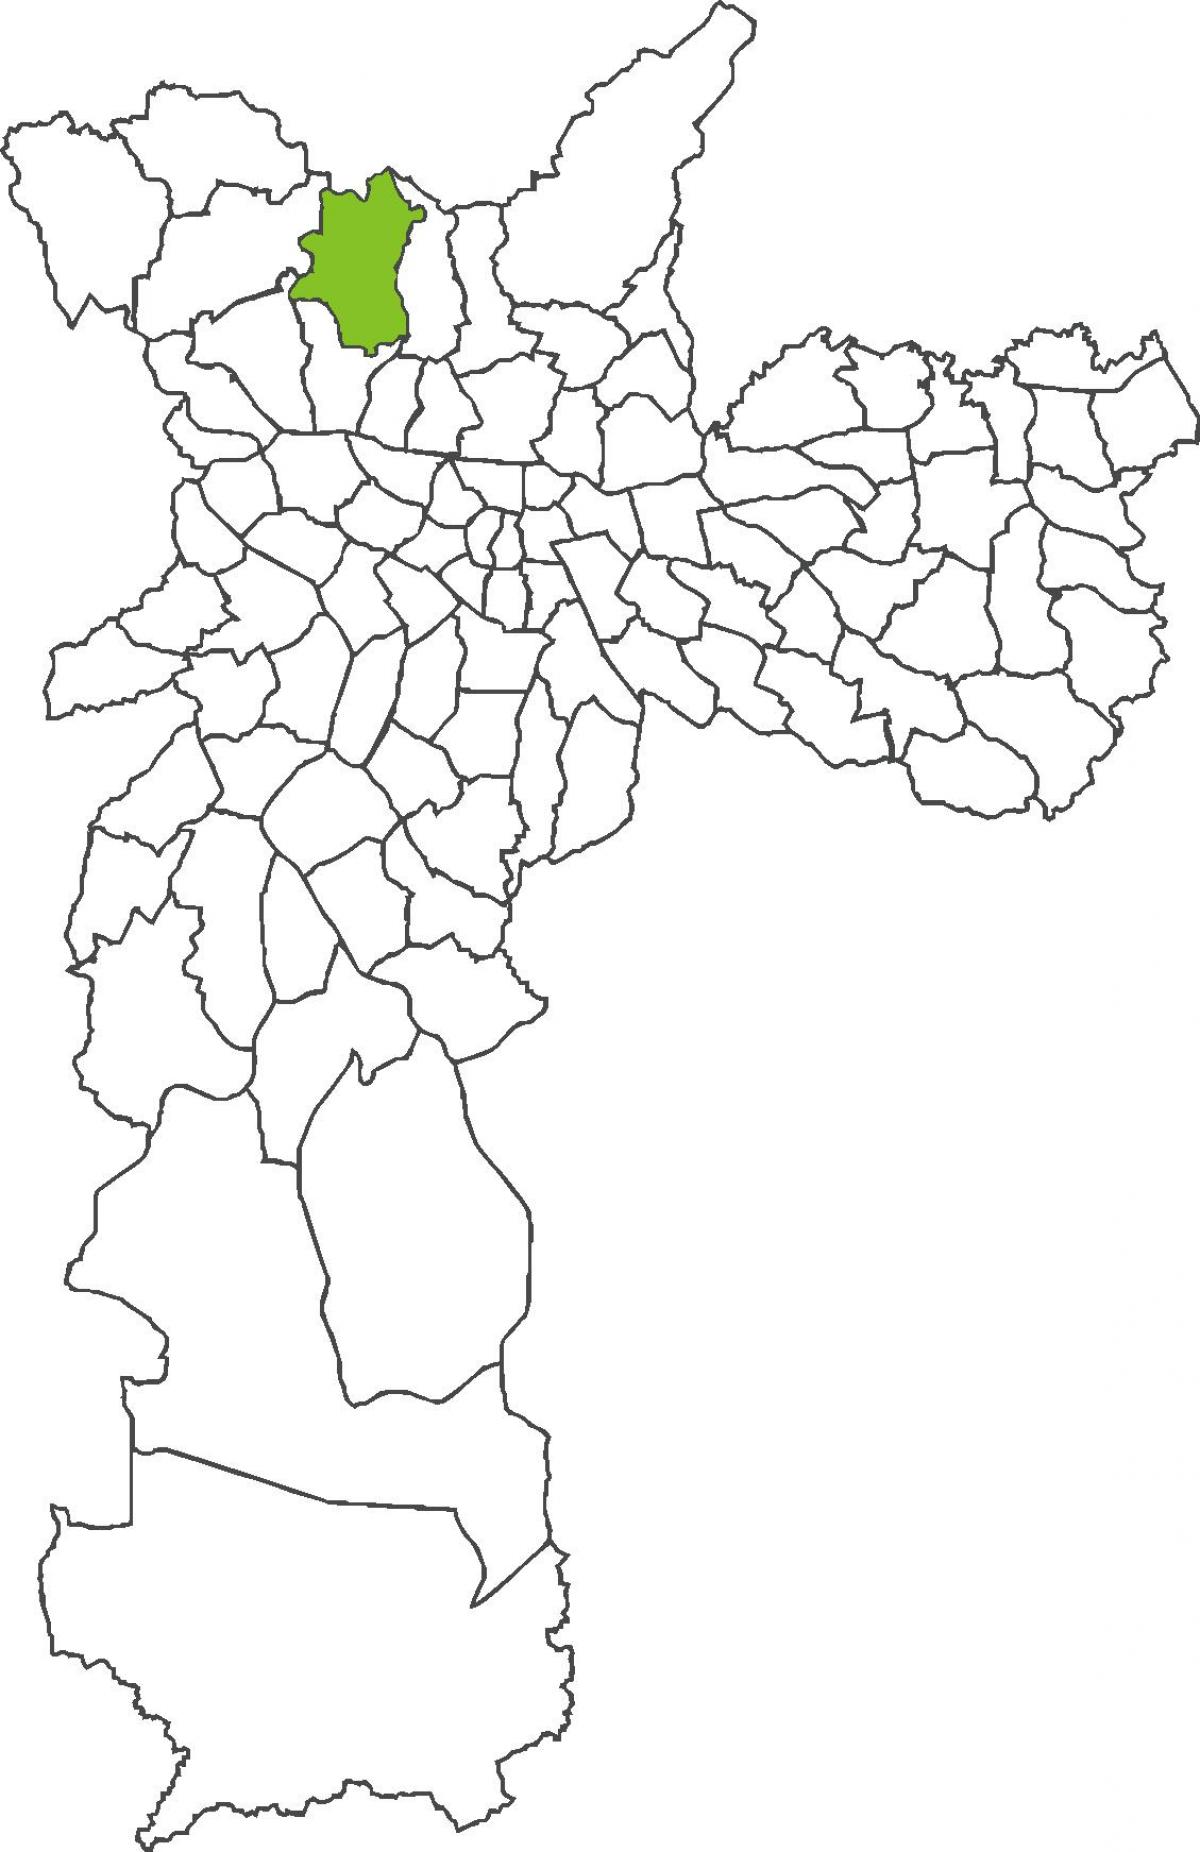 Kart over distriktet Brasilândia